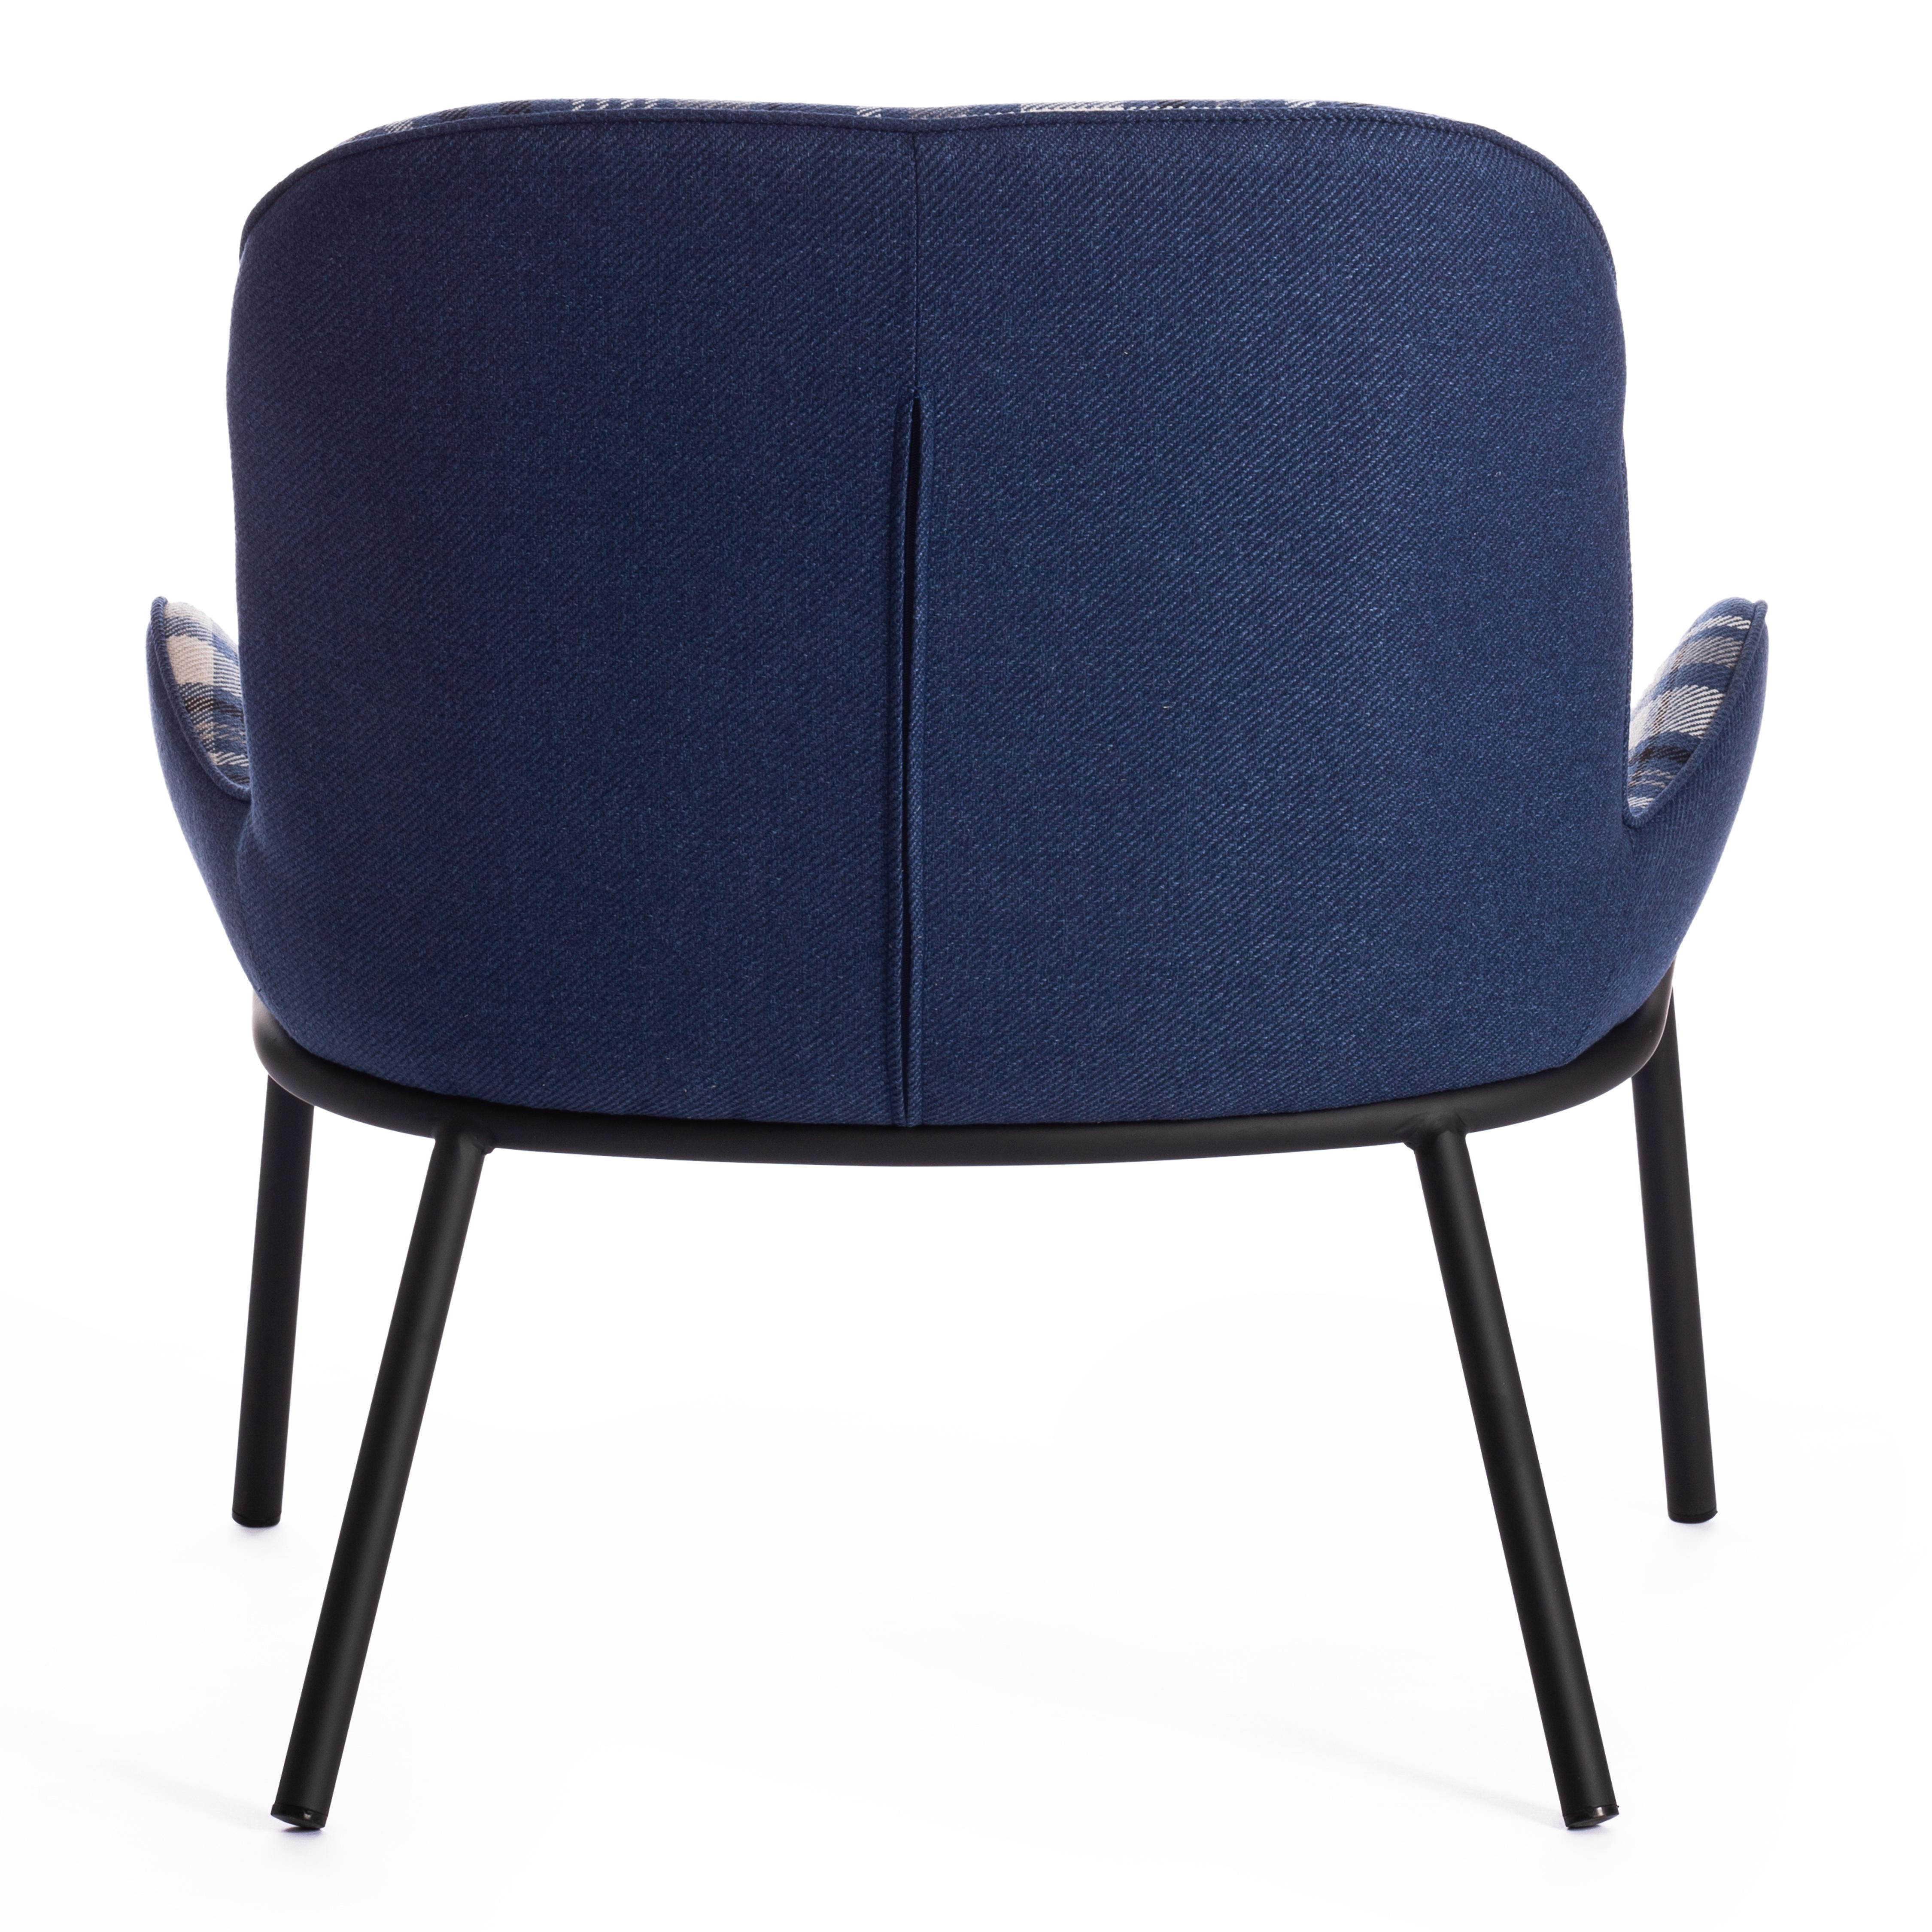 Кресло DUKEN (mod. 0179322) металл/ткань, 79х59х66 см, синий/синяя шотландка/черный